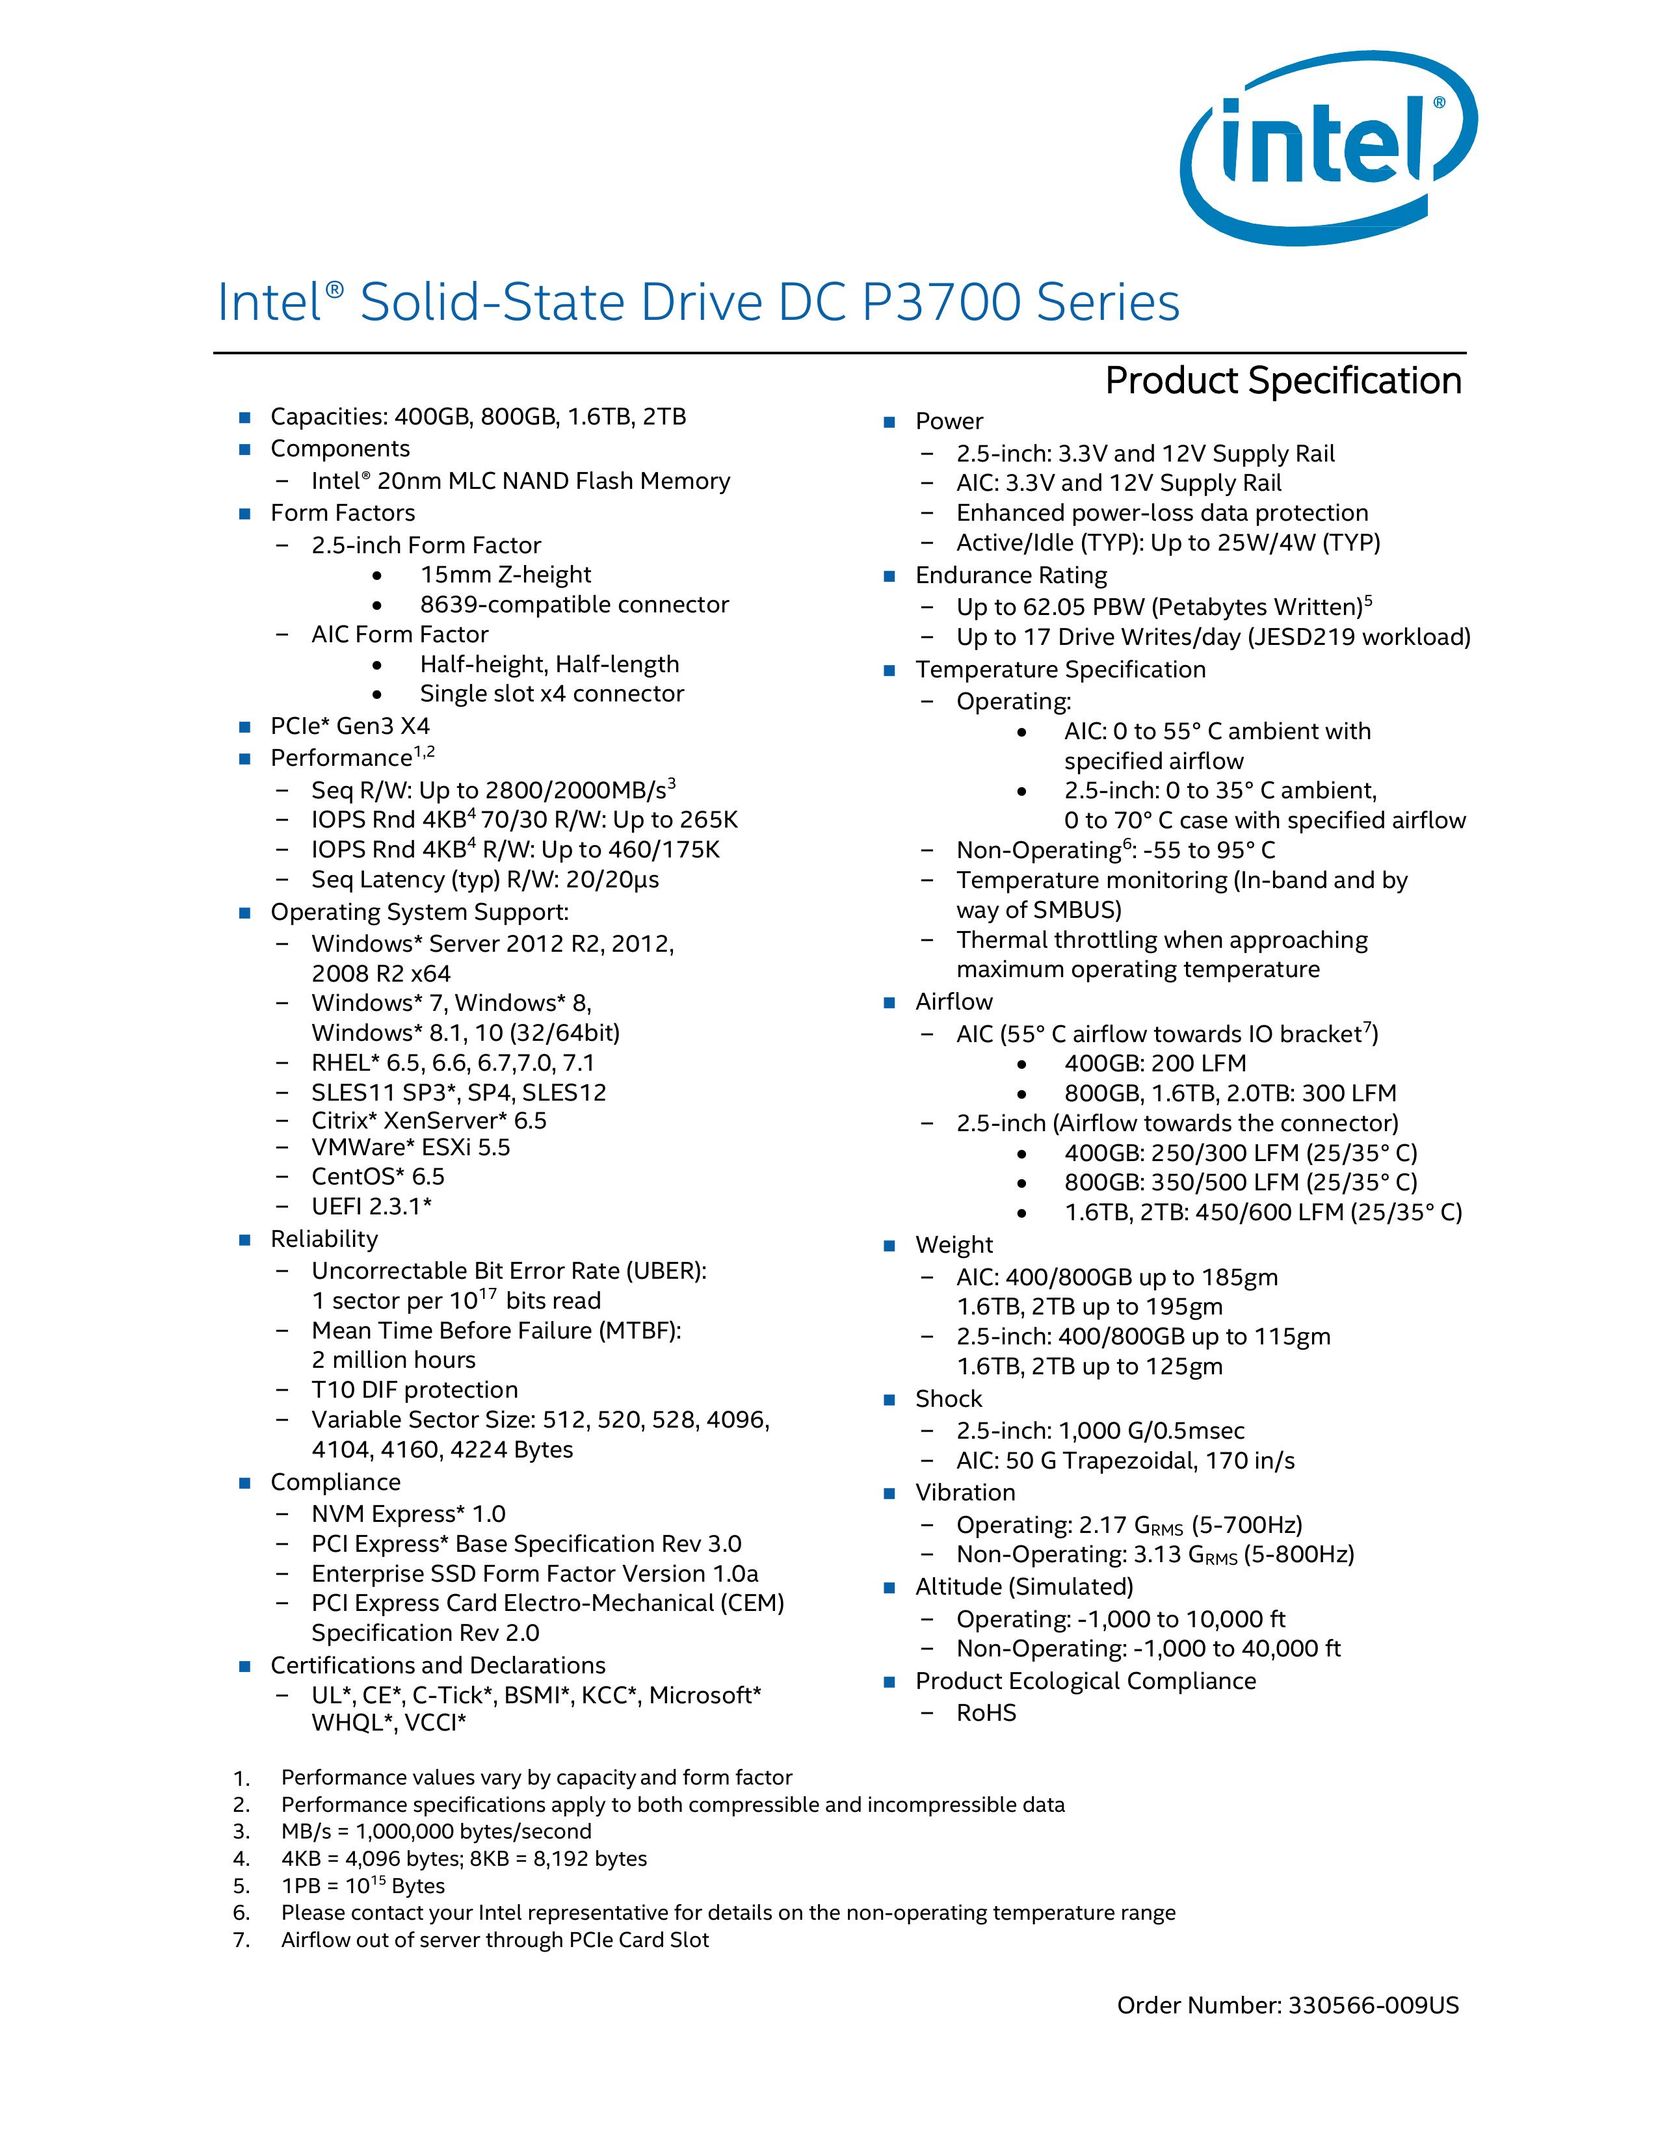 Intel P3700 Doll User Manual